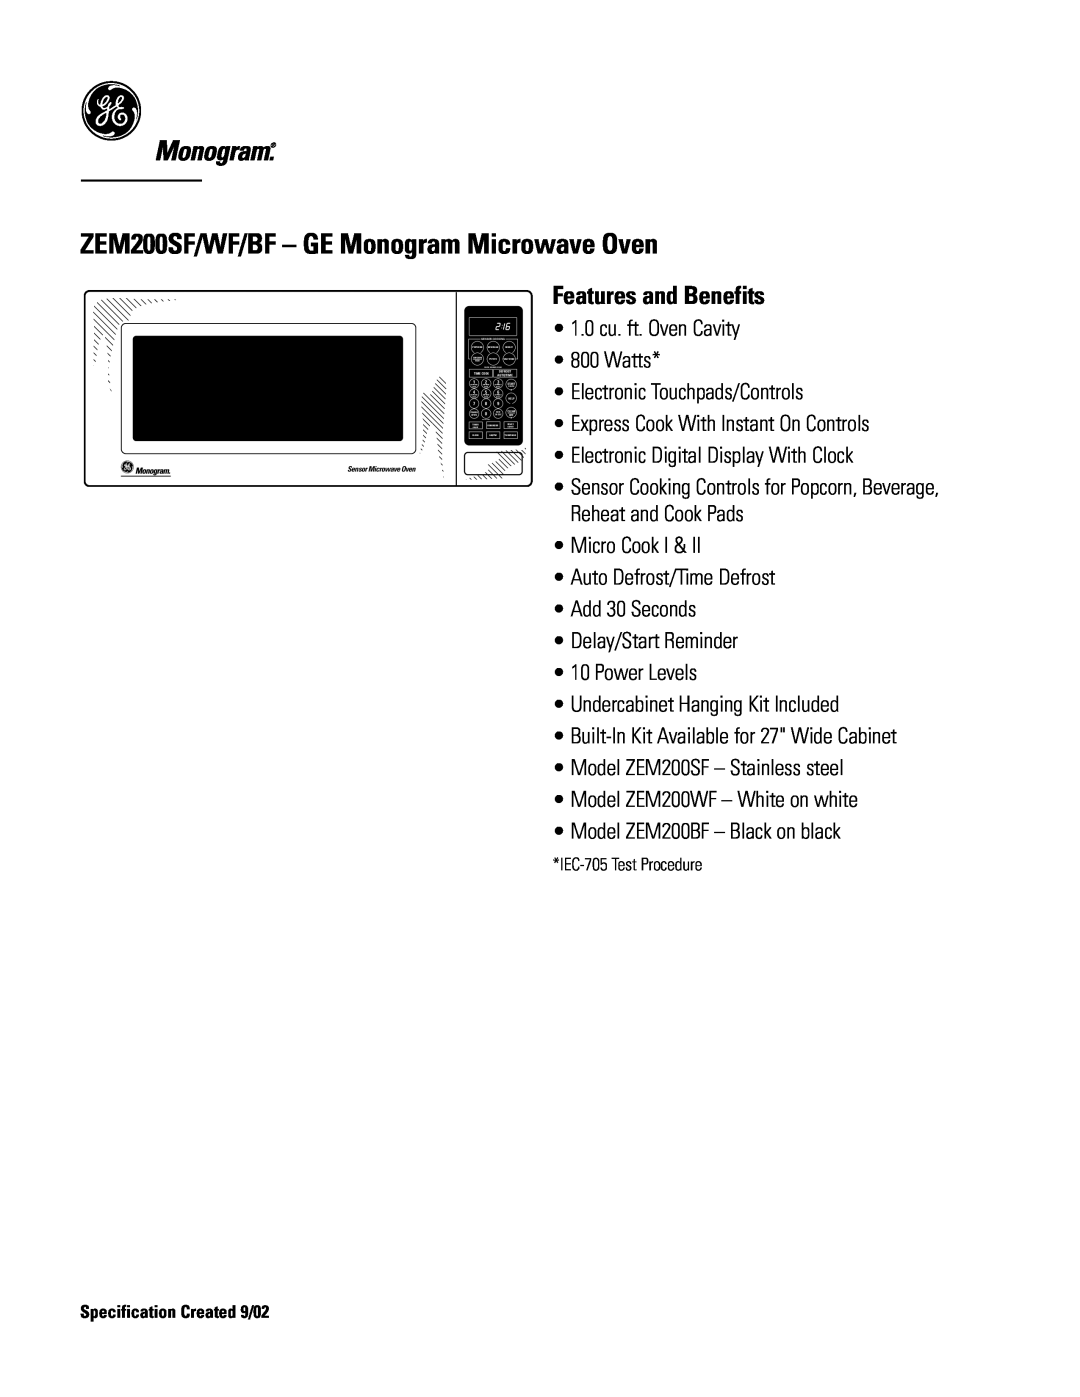 GE Monogram ZEM200BF, ZEM200WF dimensions ZEM200SF/WF/BF - GE Monogram Microwave Oven, Features and Benefits 